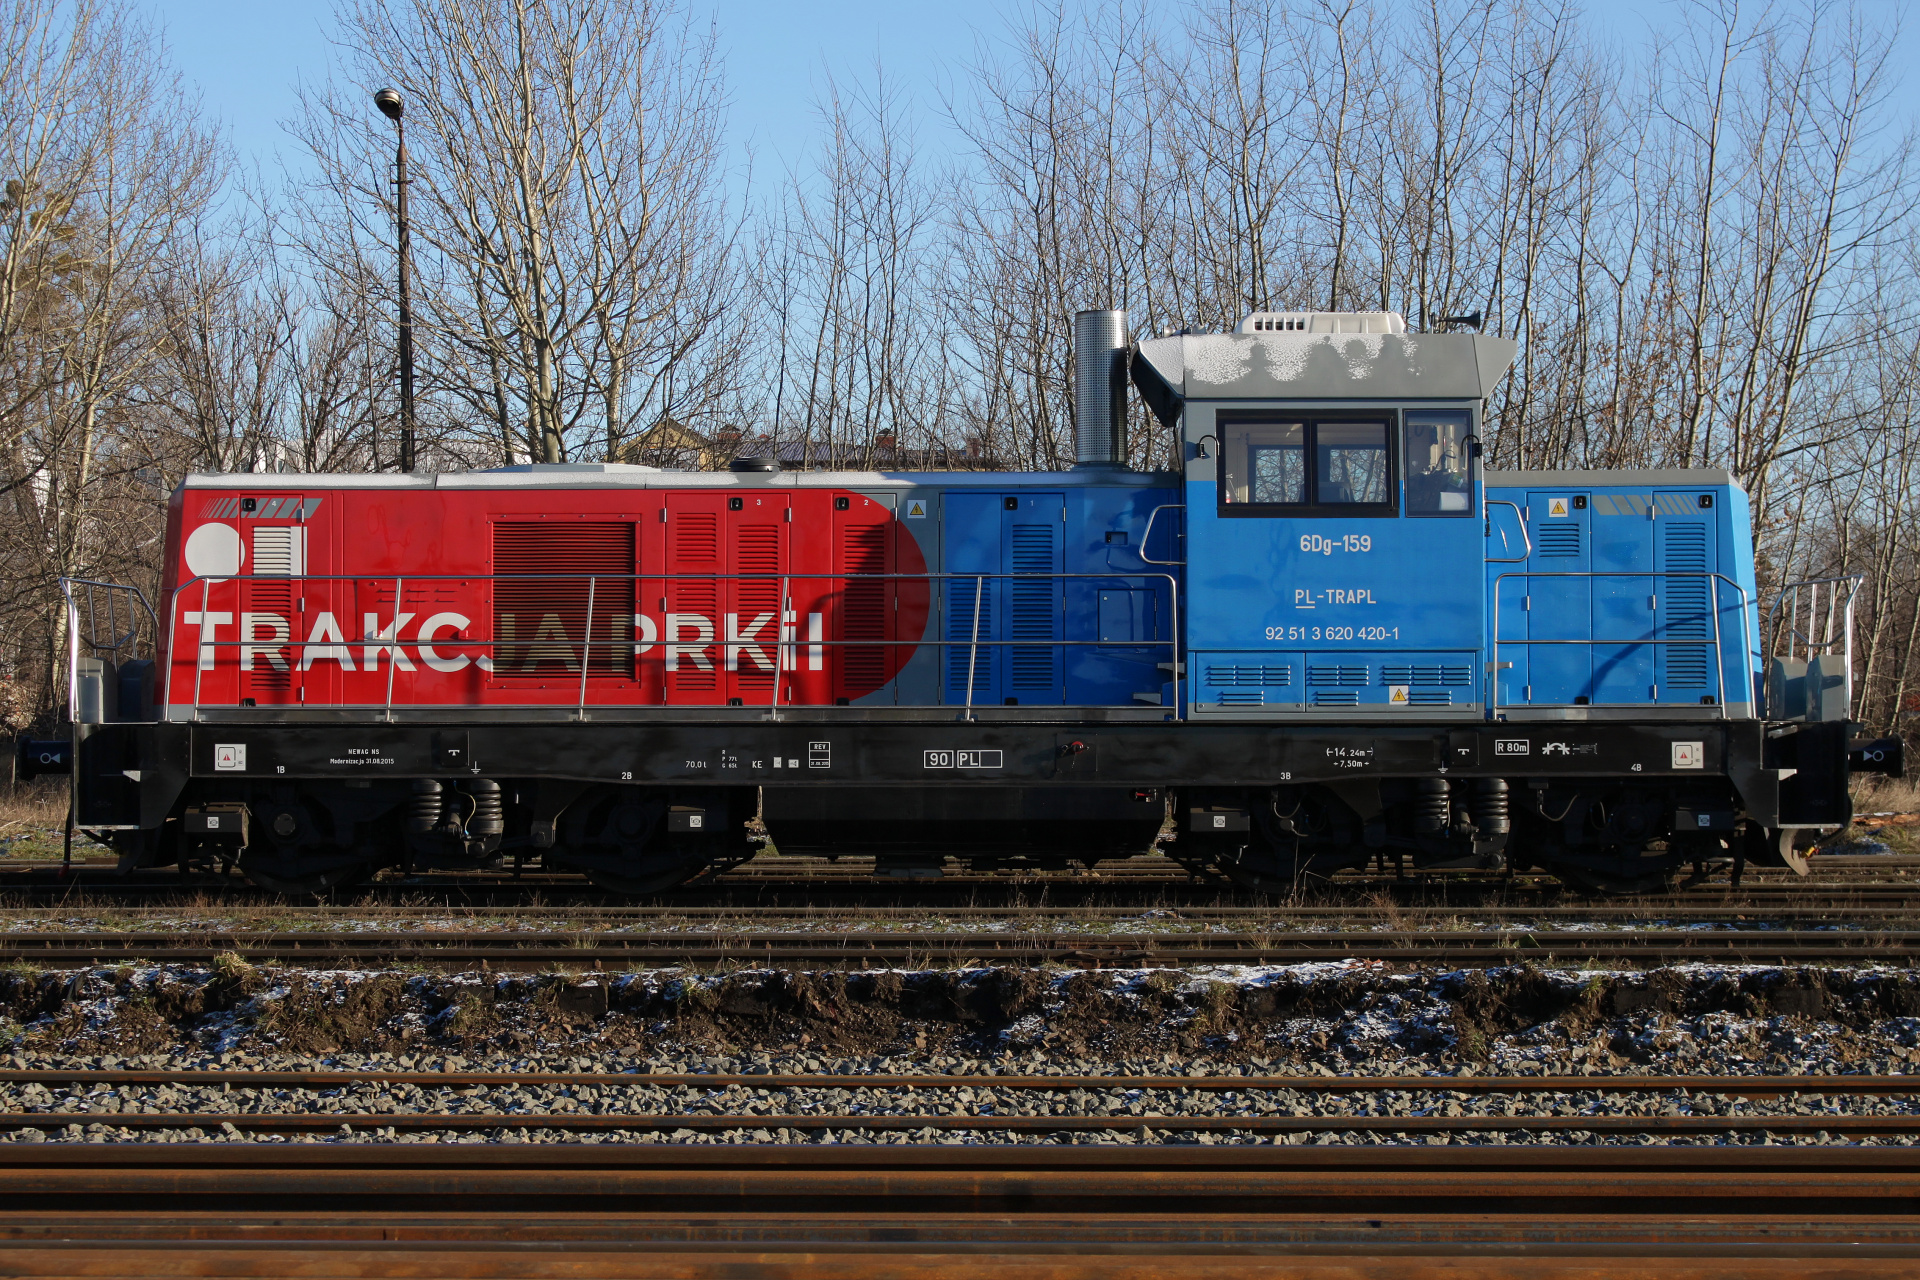 Newag 6Dg-159 (Vehicles » Trains and Locomotives)